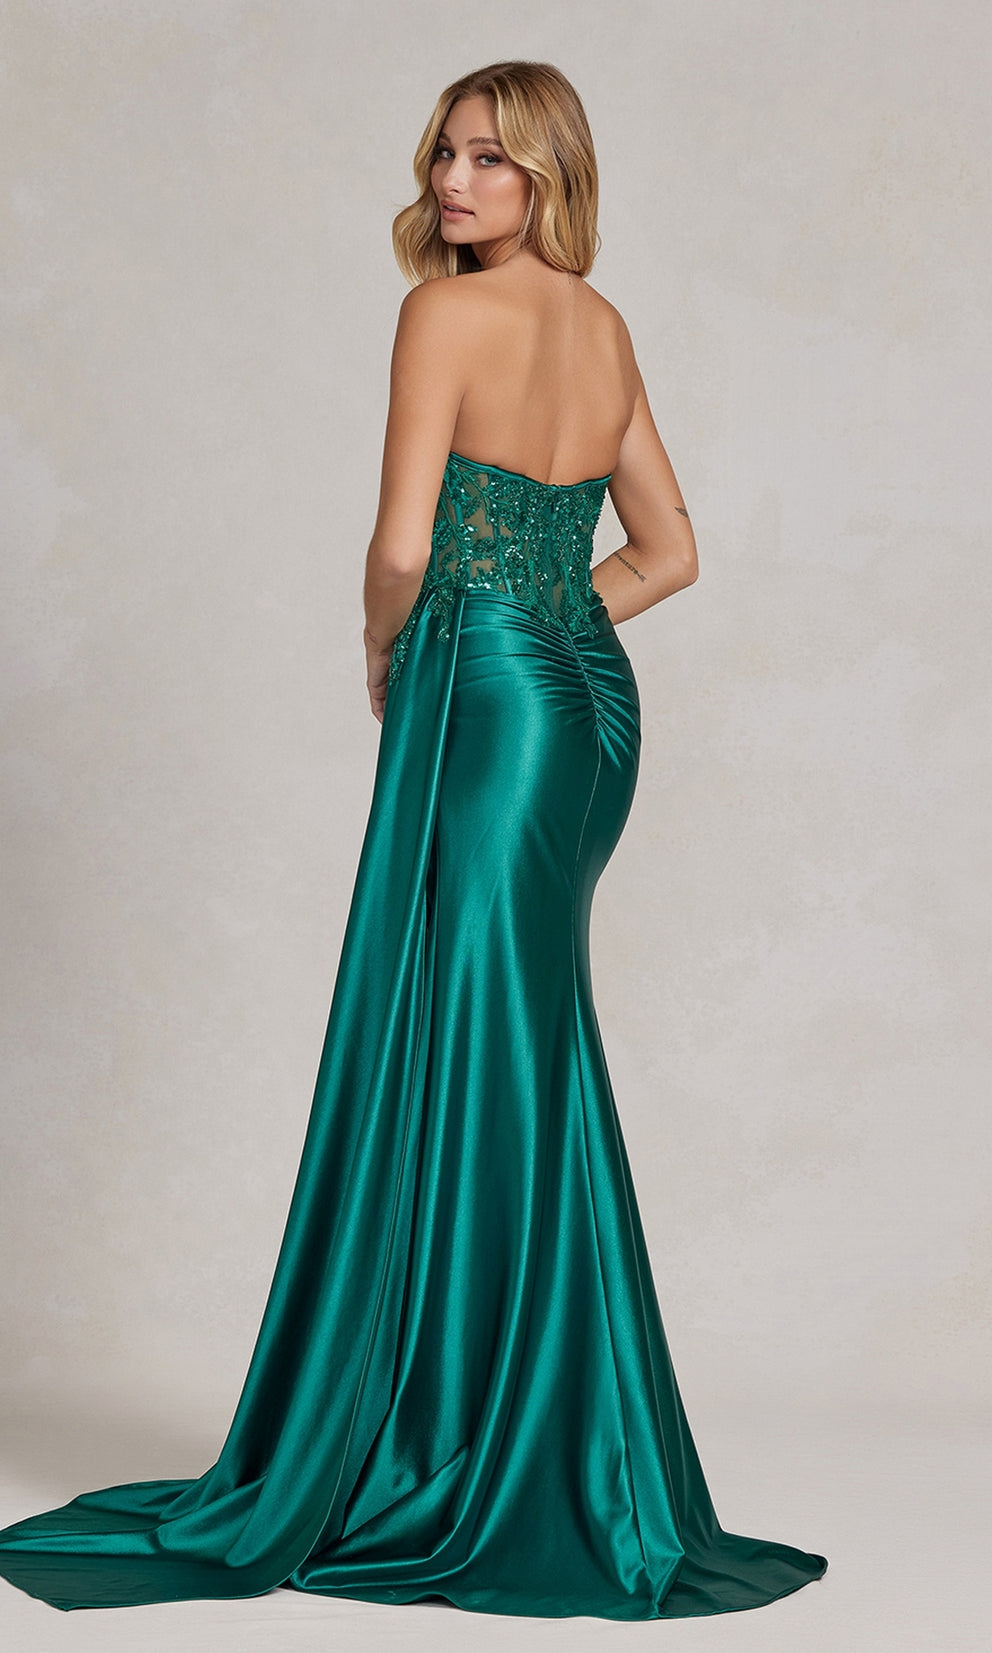 KIANA Emerald Green Strapless Sequin Bustier Corset Silky Mermaid Prom Formal Dress